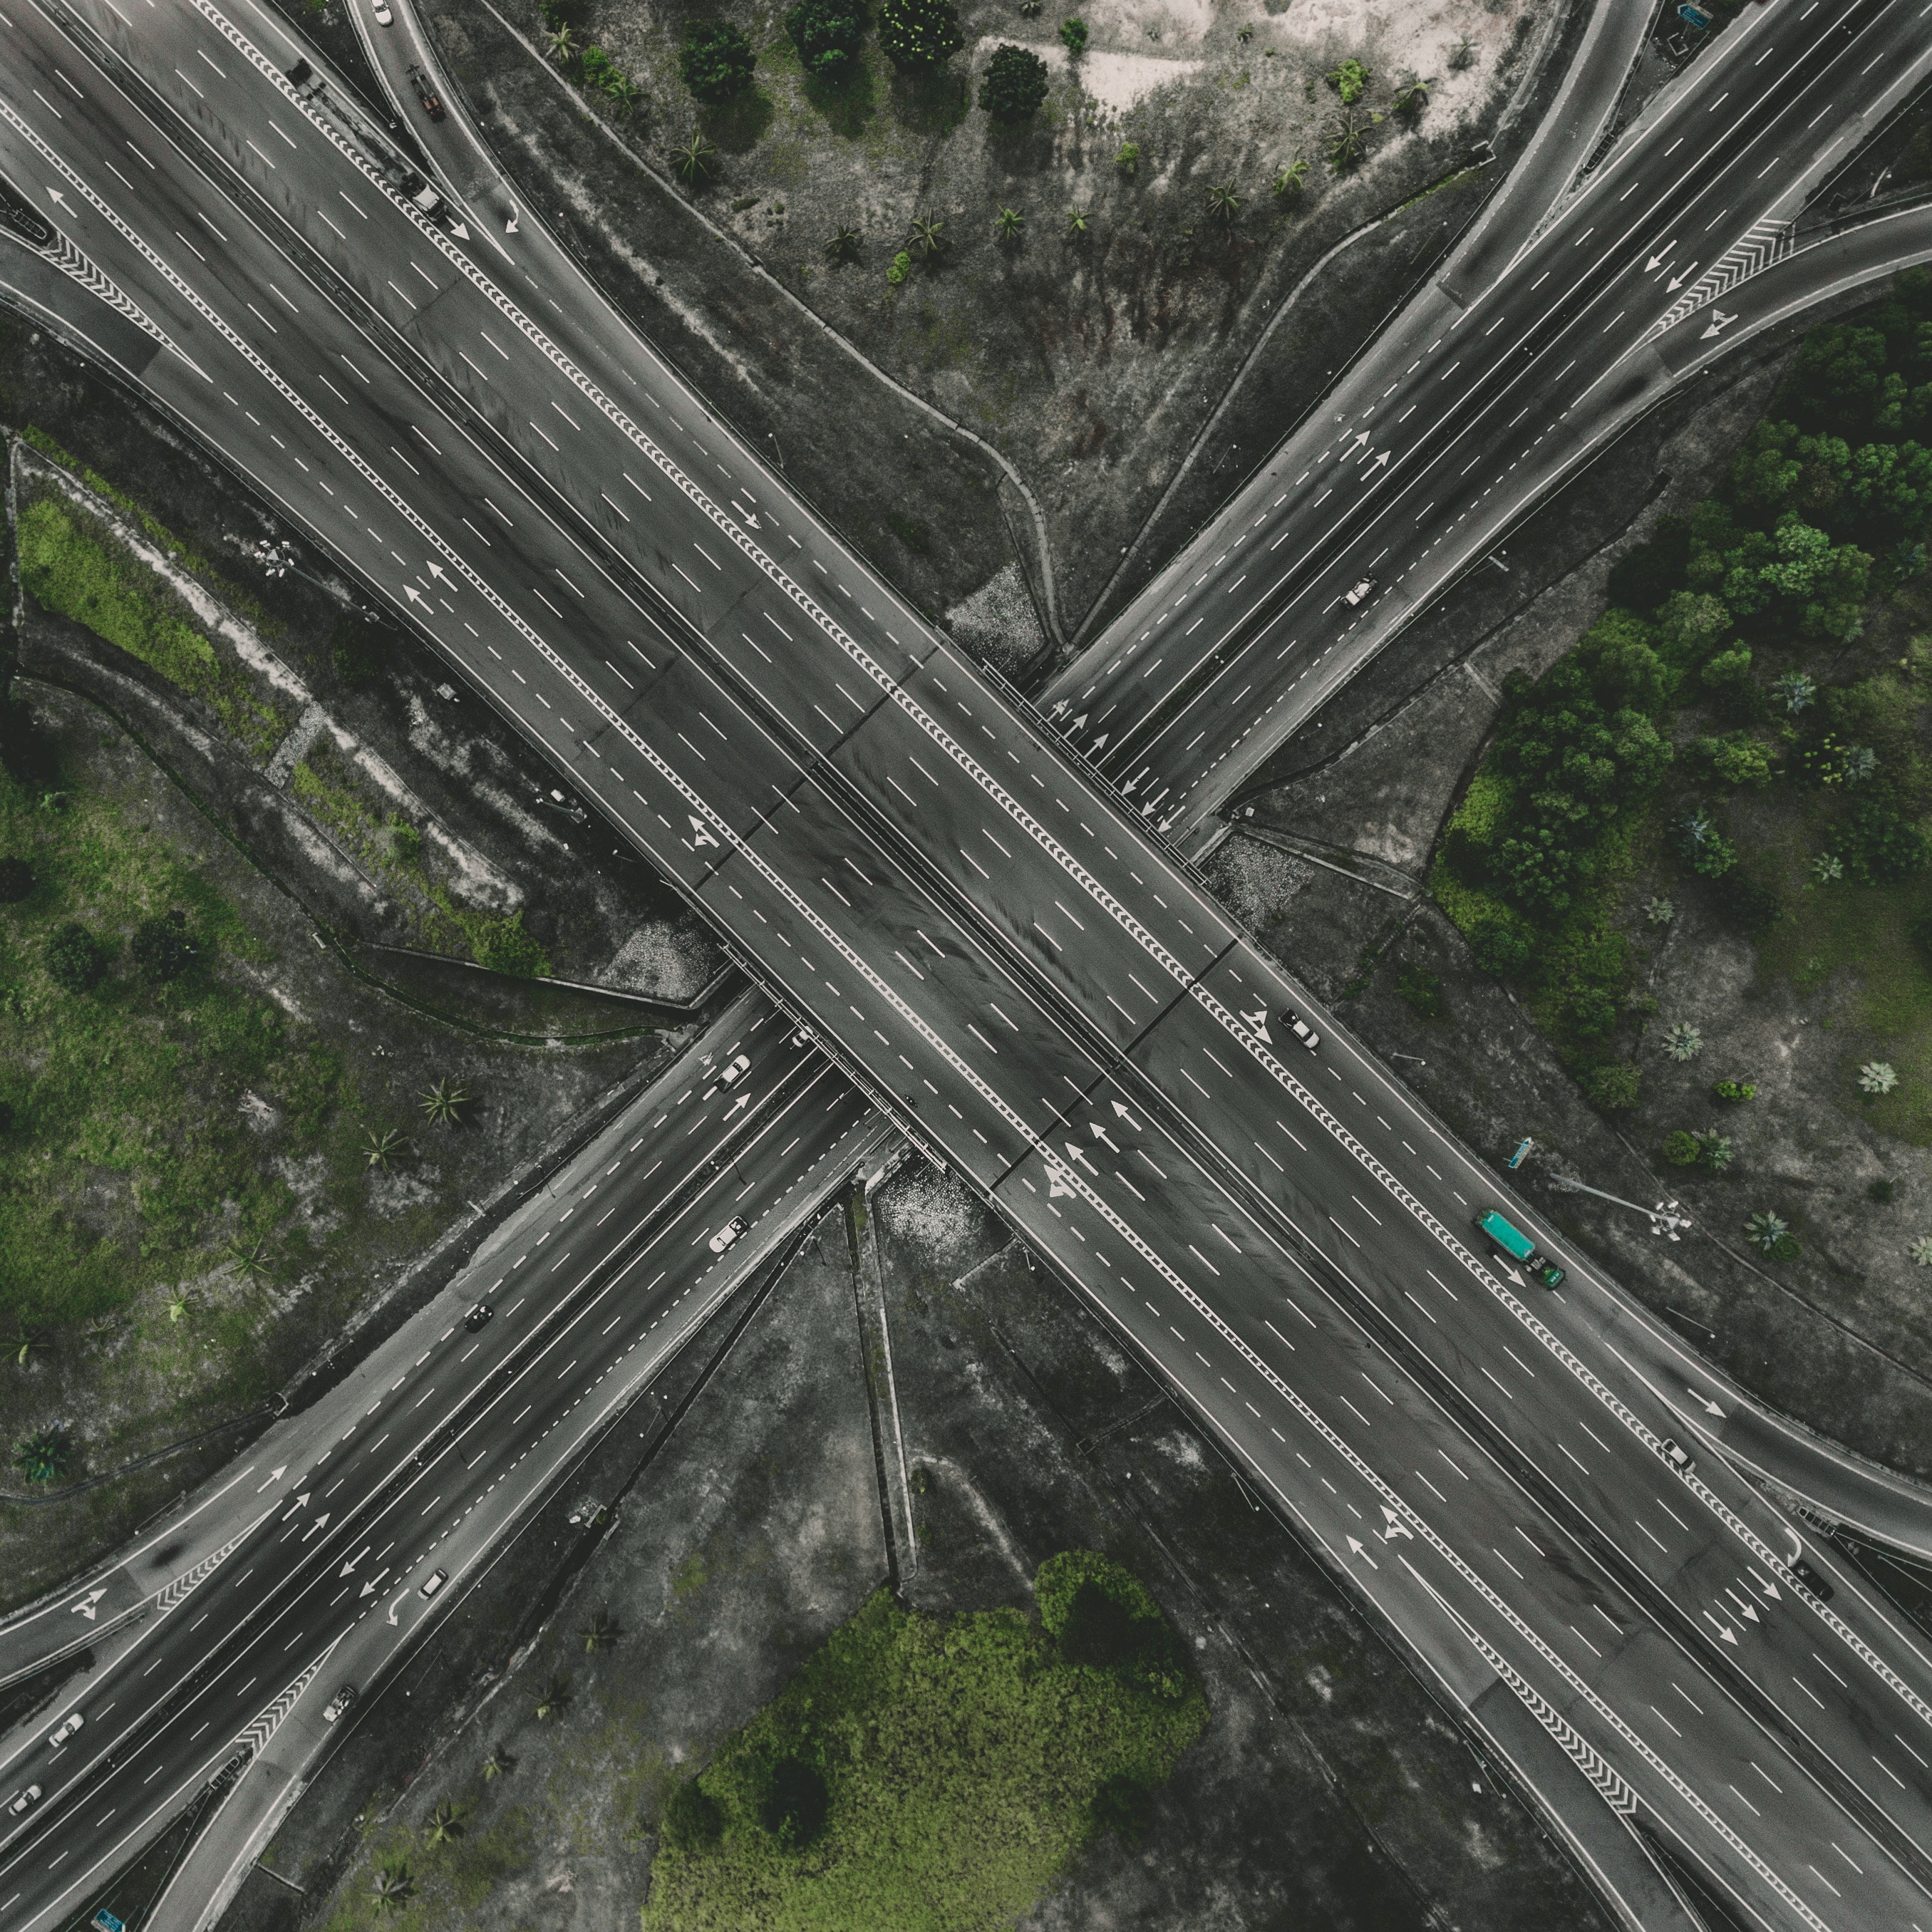 interchange road, roads, aerial view, traffic, direction